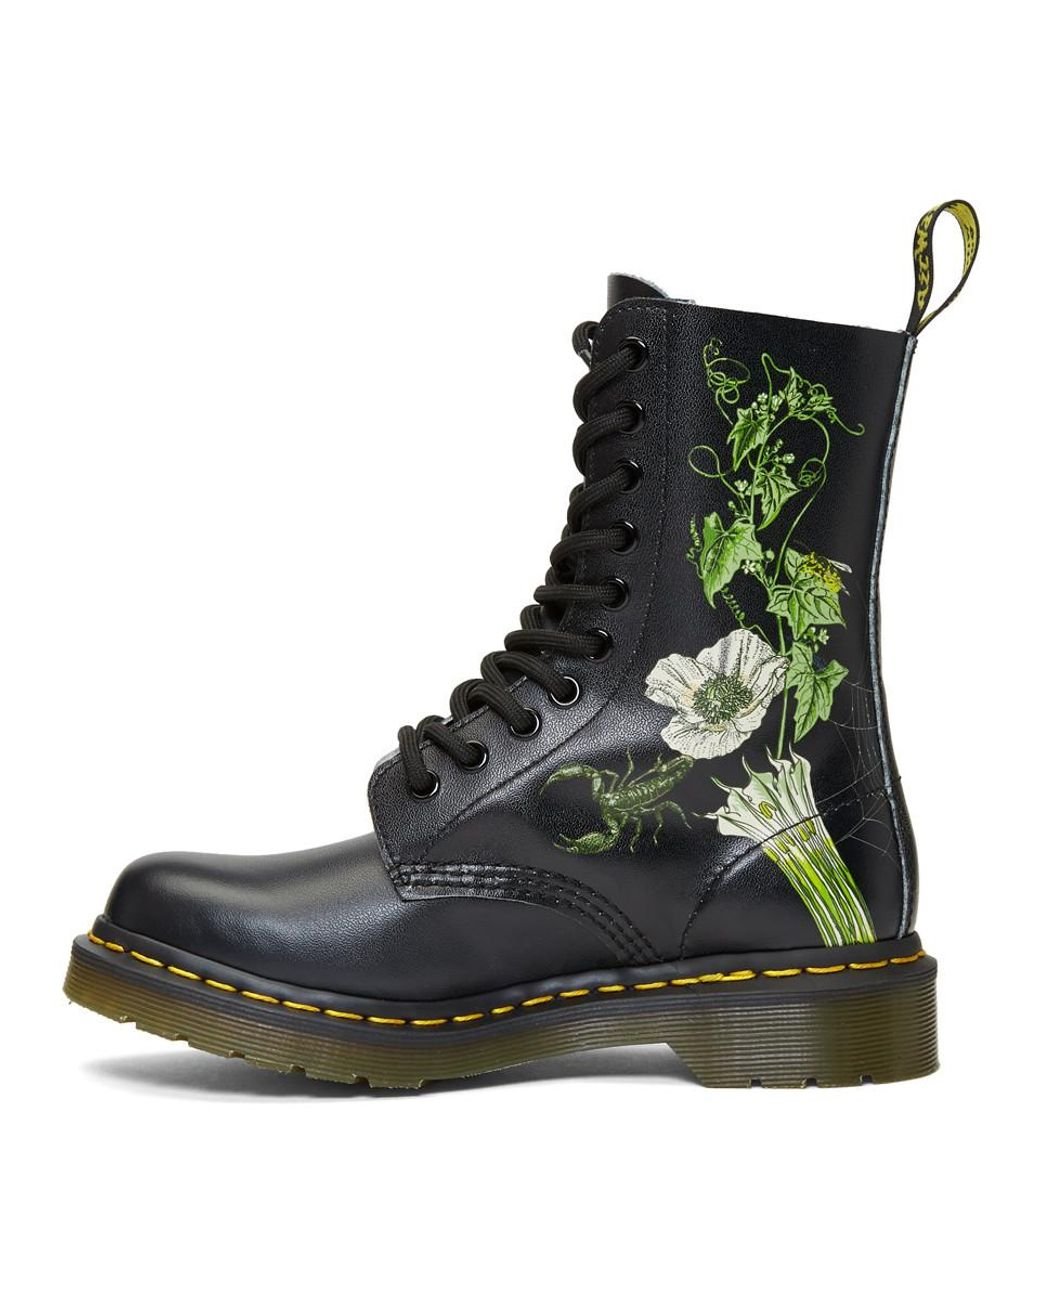 Dr. Martens Black 1490 Wild Botanics Boots | Lyst